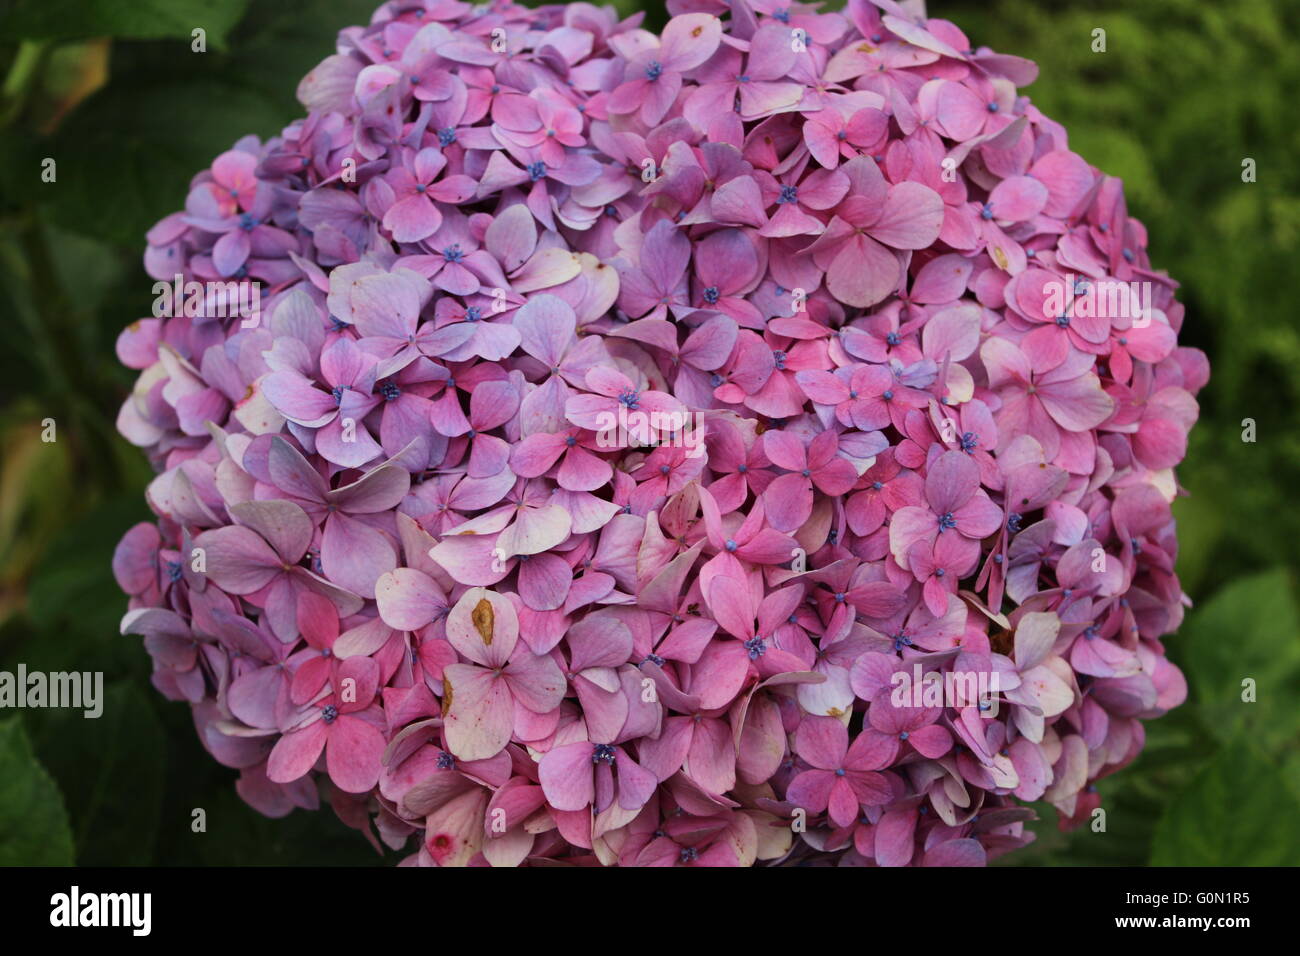 Hydrangea flowerhead Stock Photo